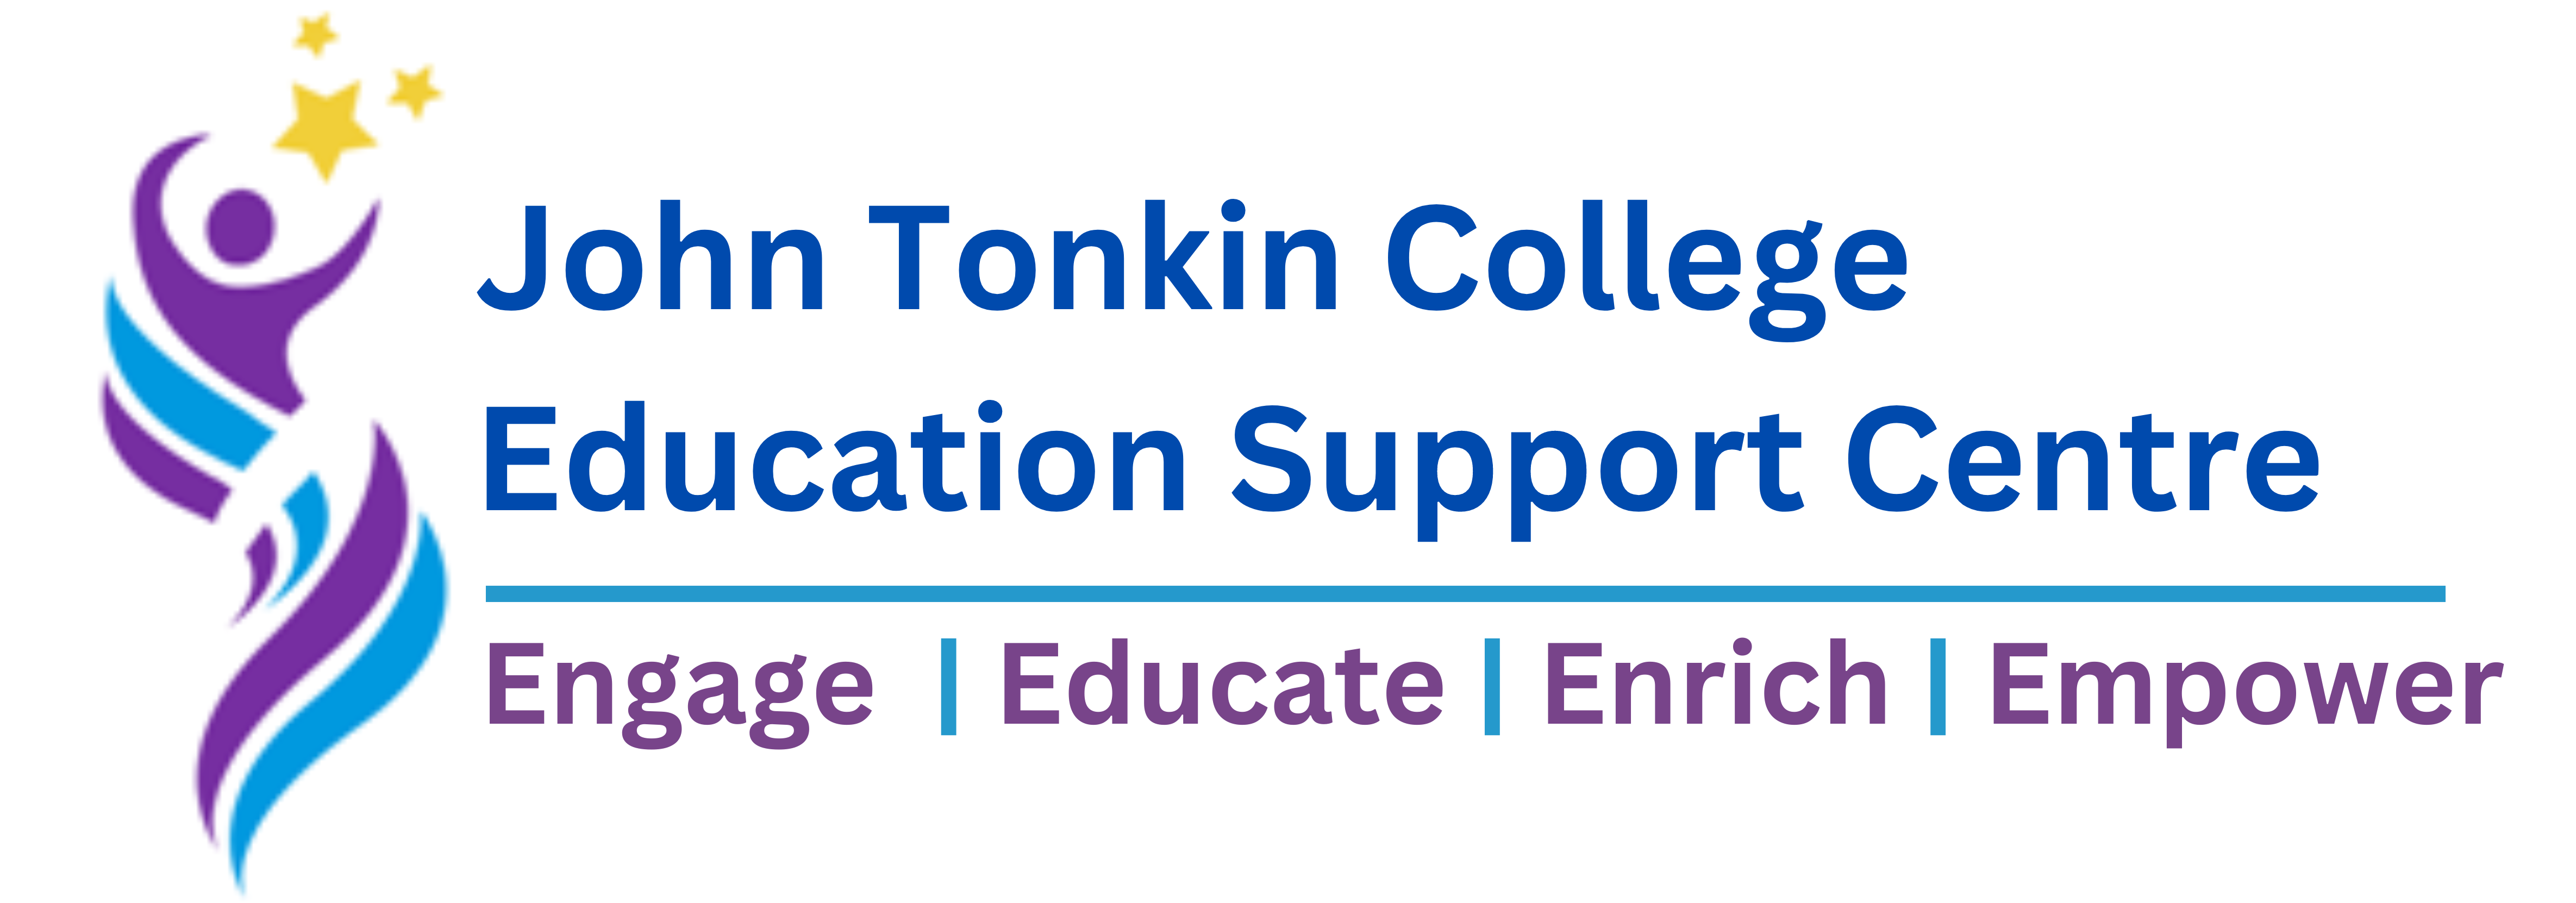 John Tonkin College Education Support Centre